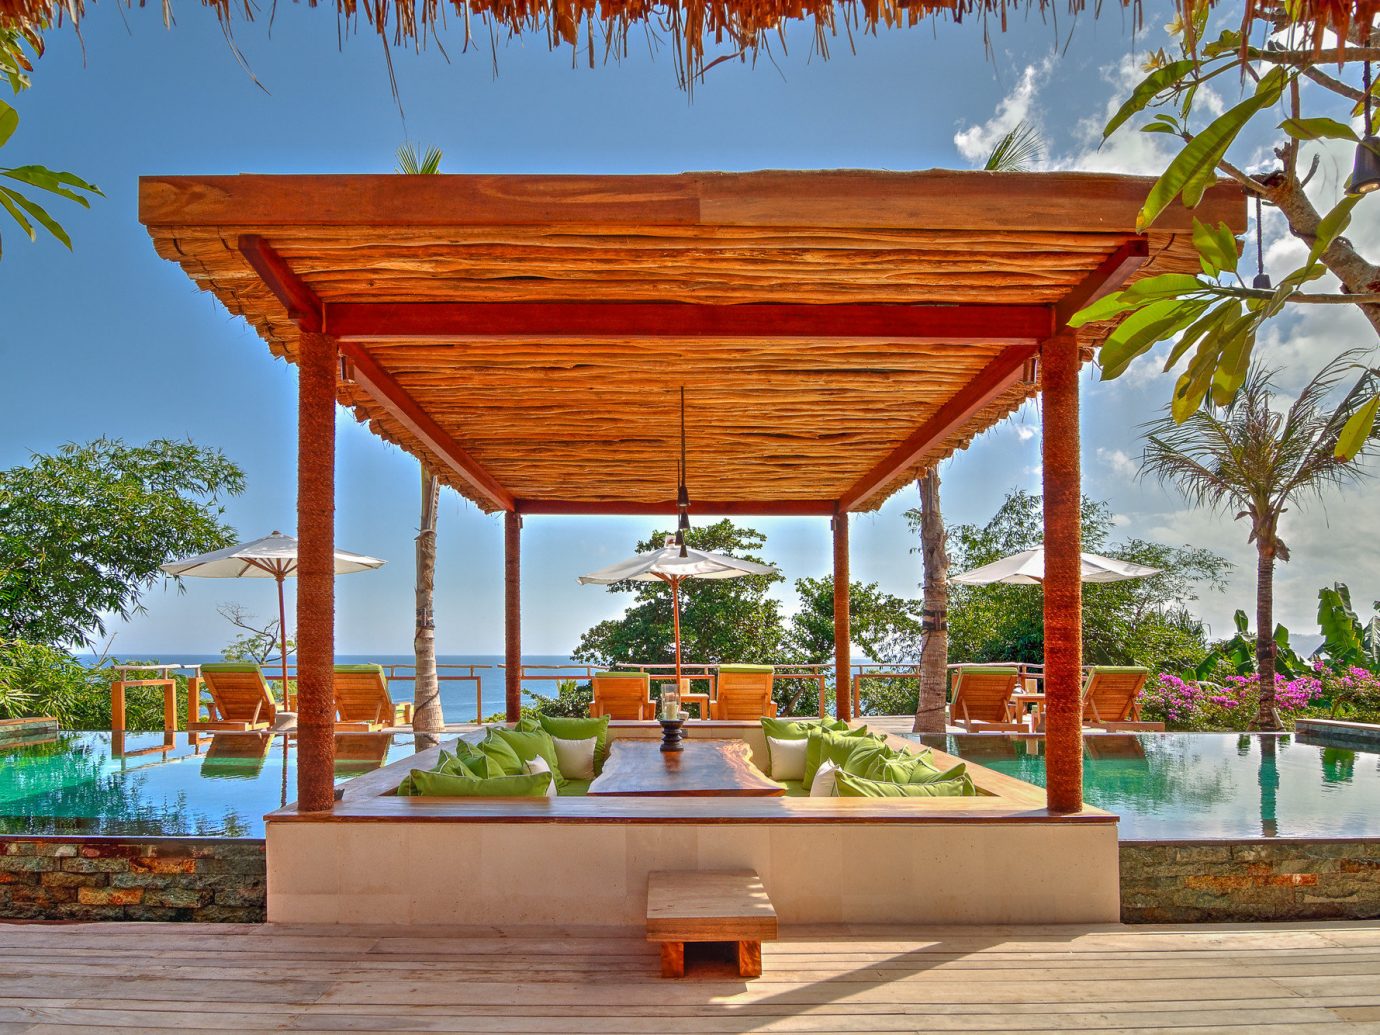 Beach Islands Luxury Travel Trip Ideas tree outdoor sky building pavilion estate outdoor structure shrine temple Resort furniture